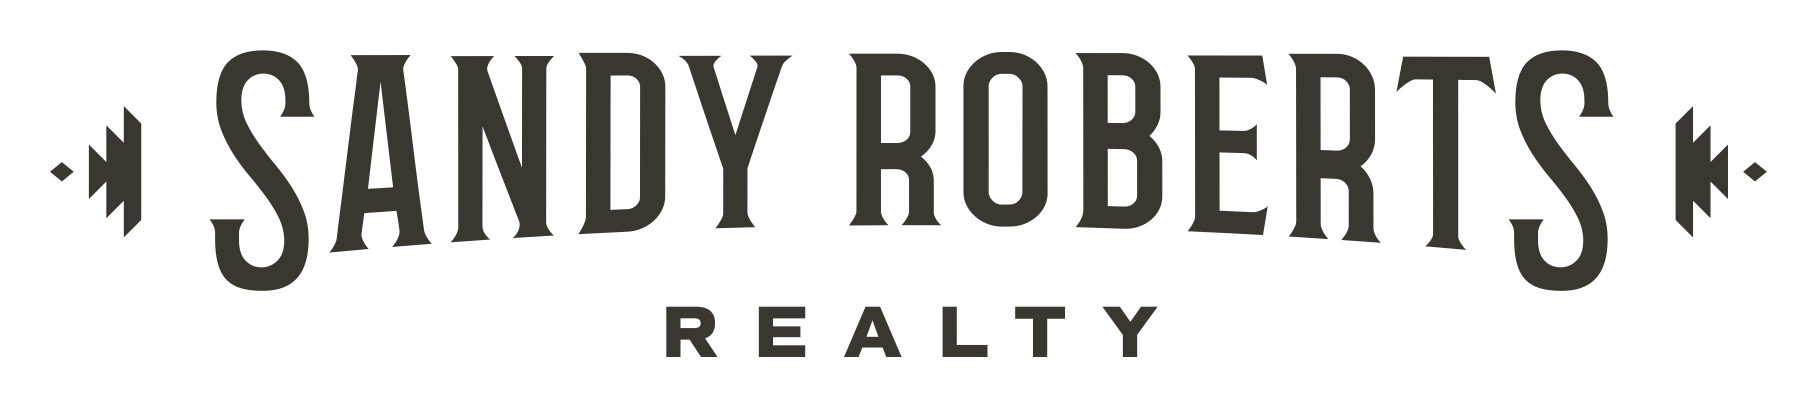 Sponsor Sandy Roberts Realty